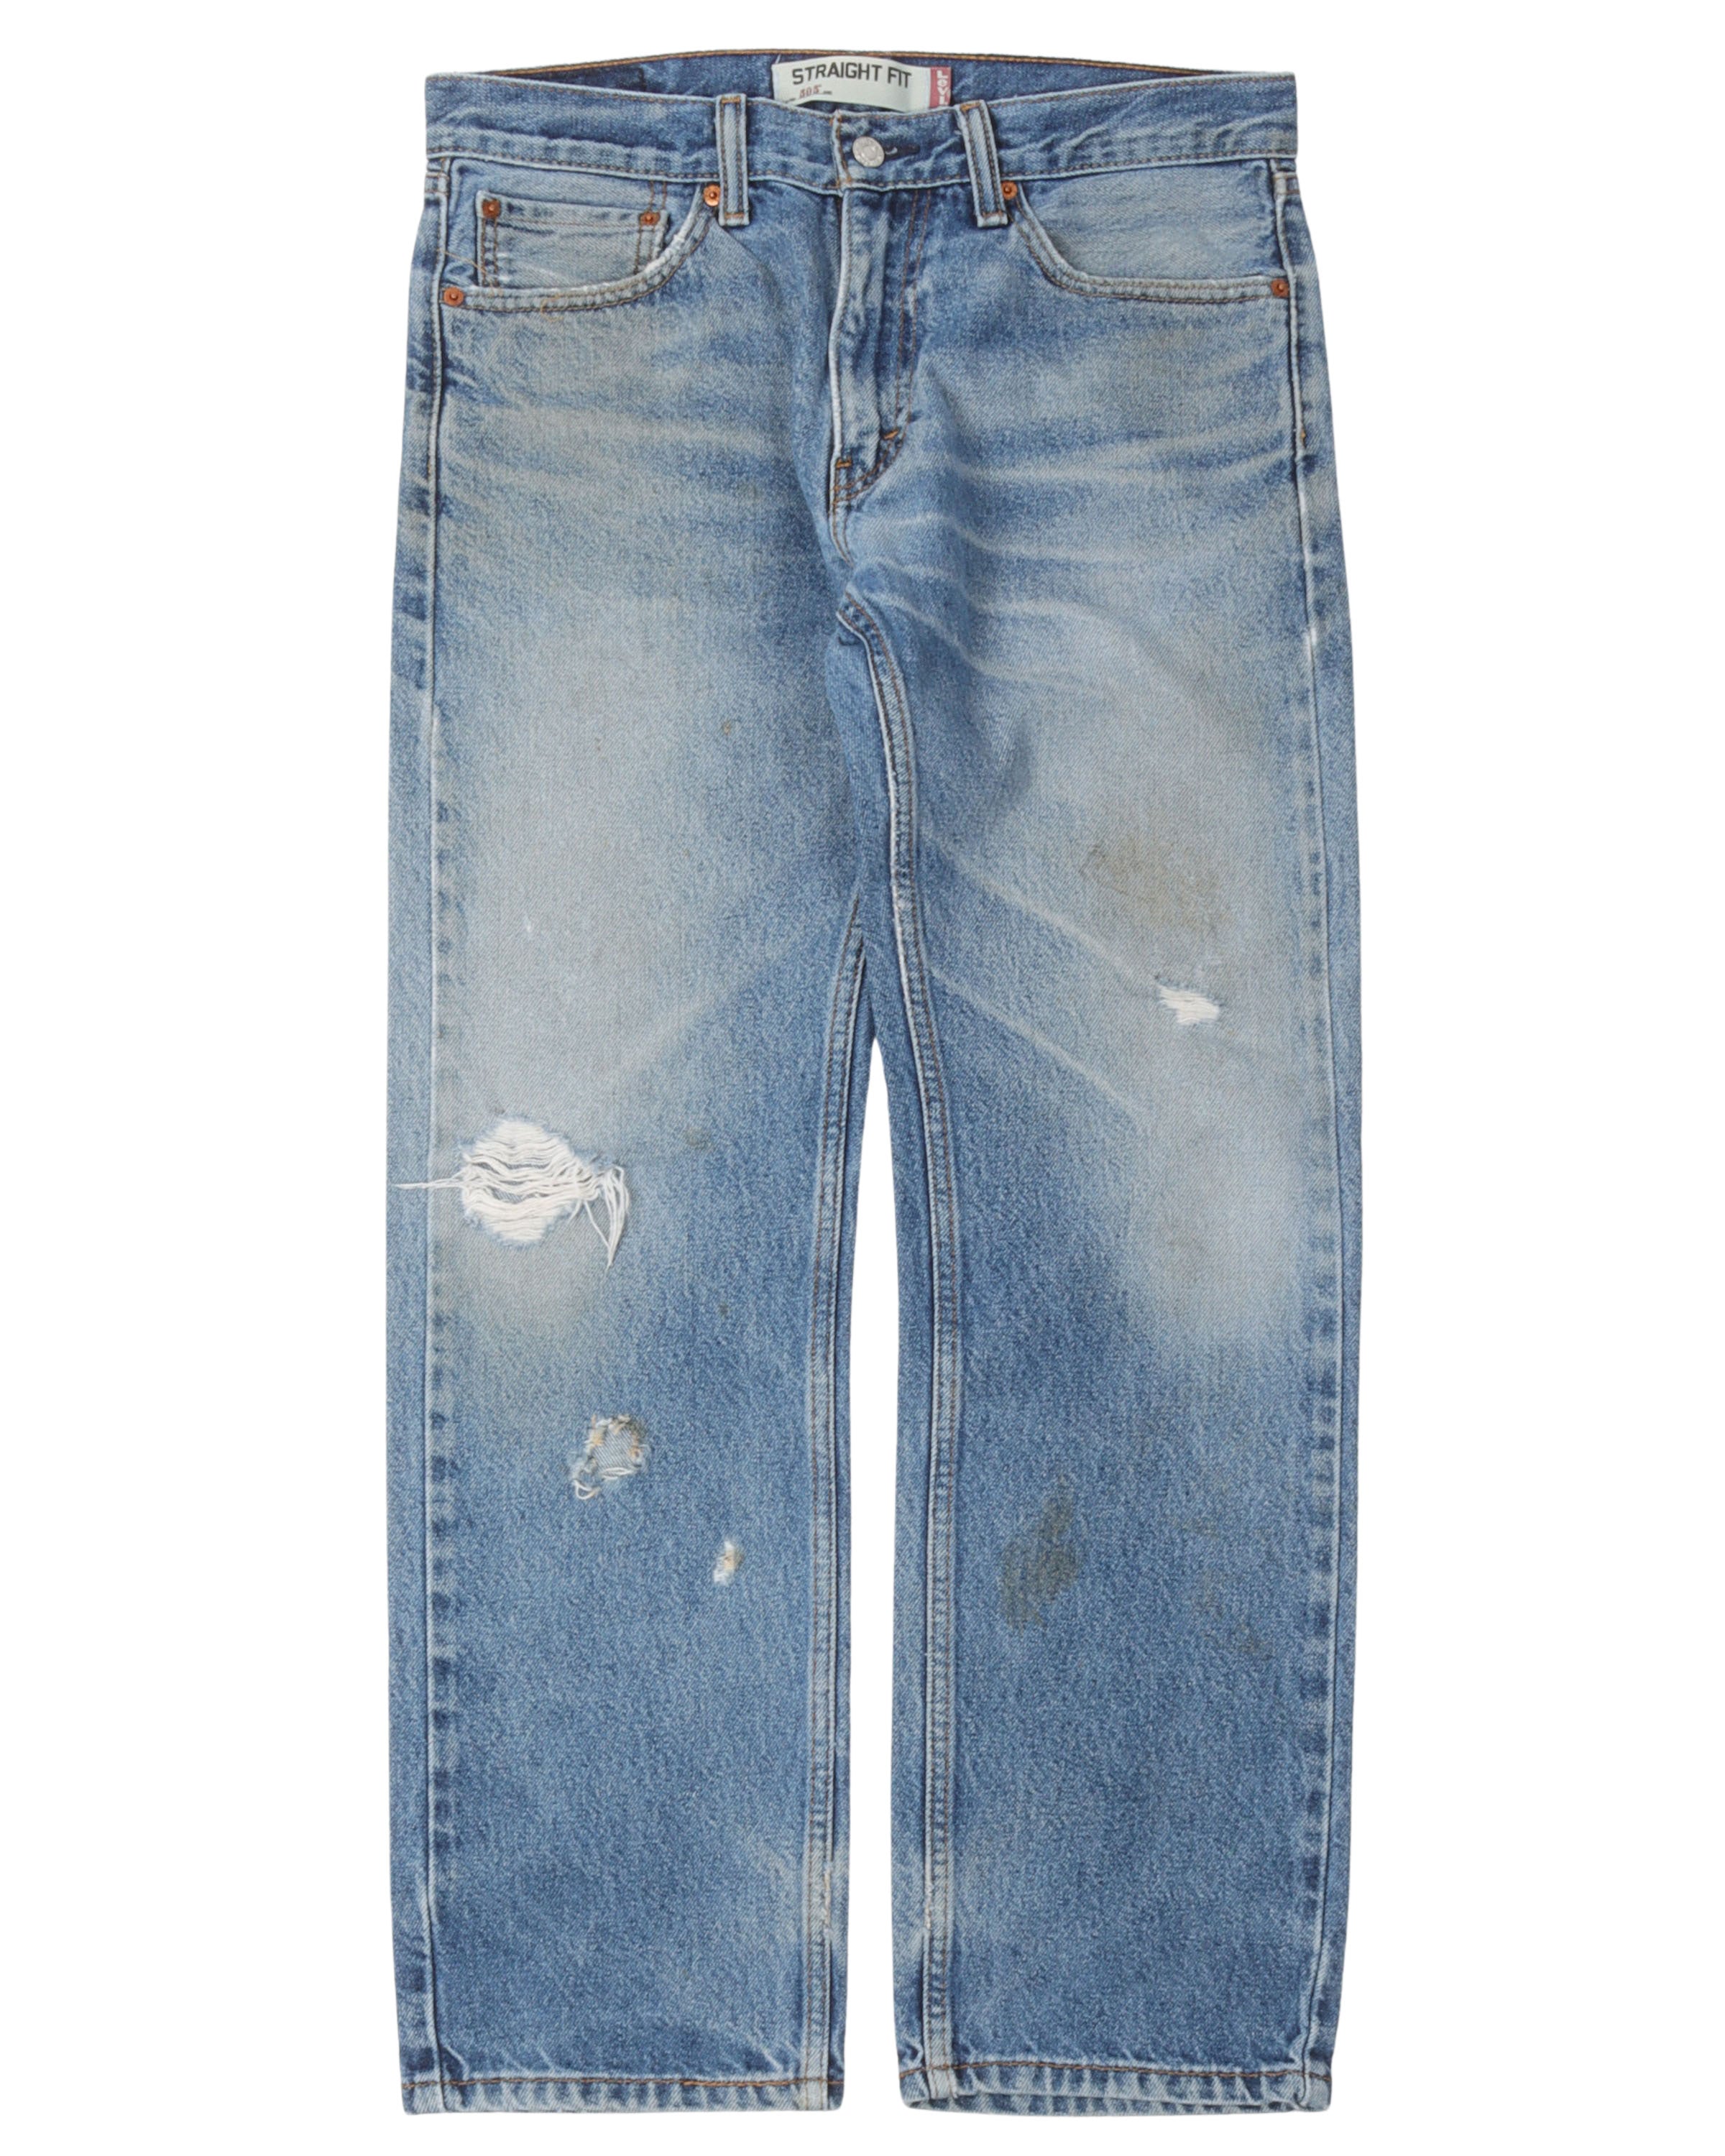 Levi's 505 Distressed Jeans